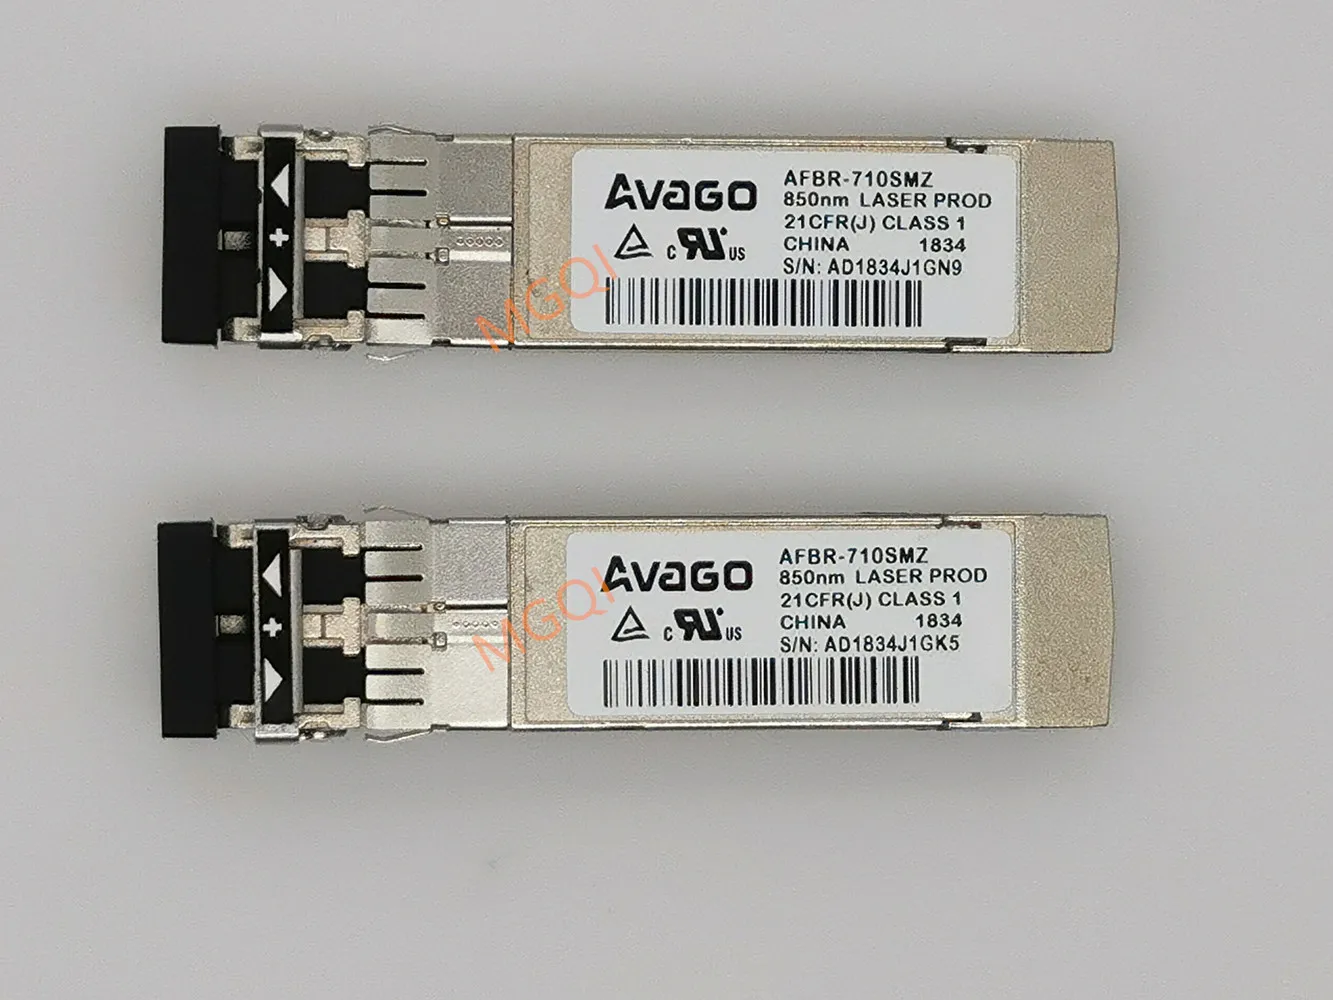 

10GBase SR AVAGO 10GB SFP Switch/AFBR-710SMZ/850nm SFP Fiber Optical Module/10g Adapter General Purpose Fiber Switch